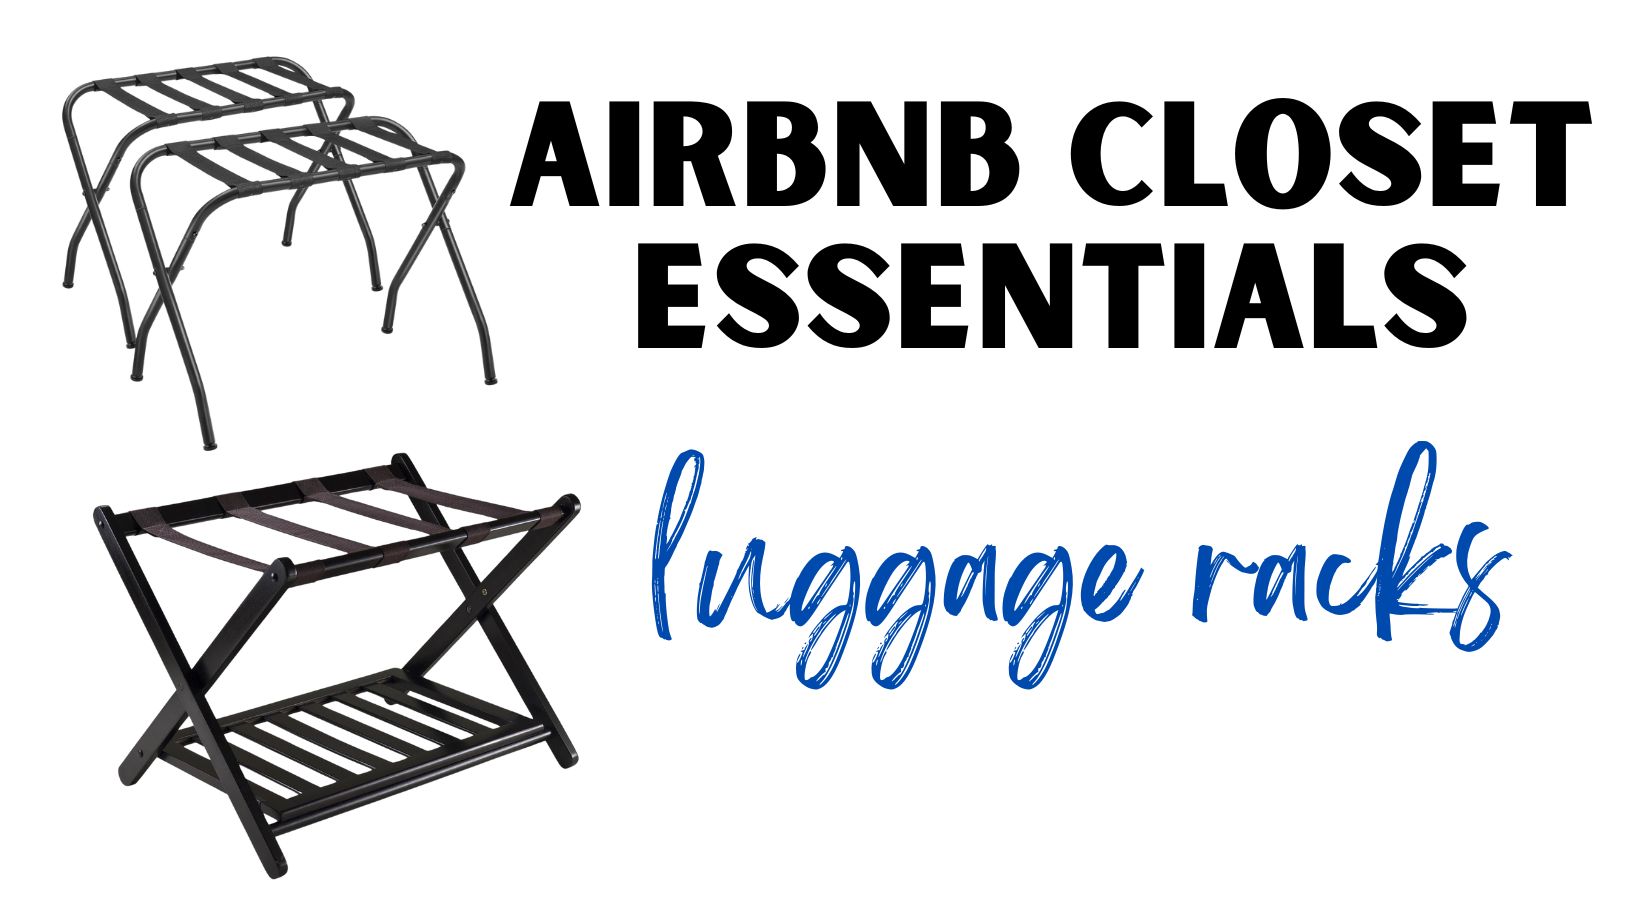 Airbnb Closet Luggage Racks